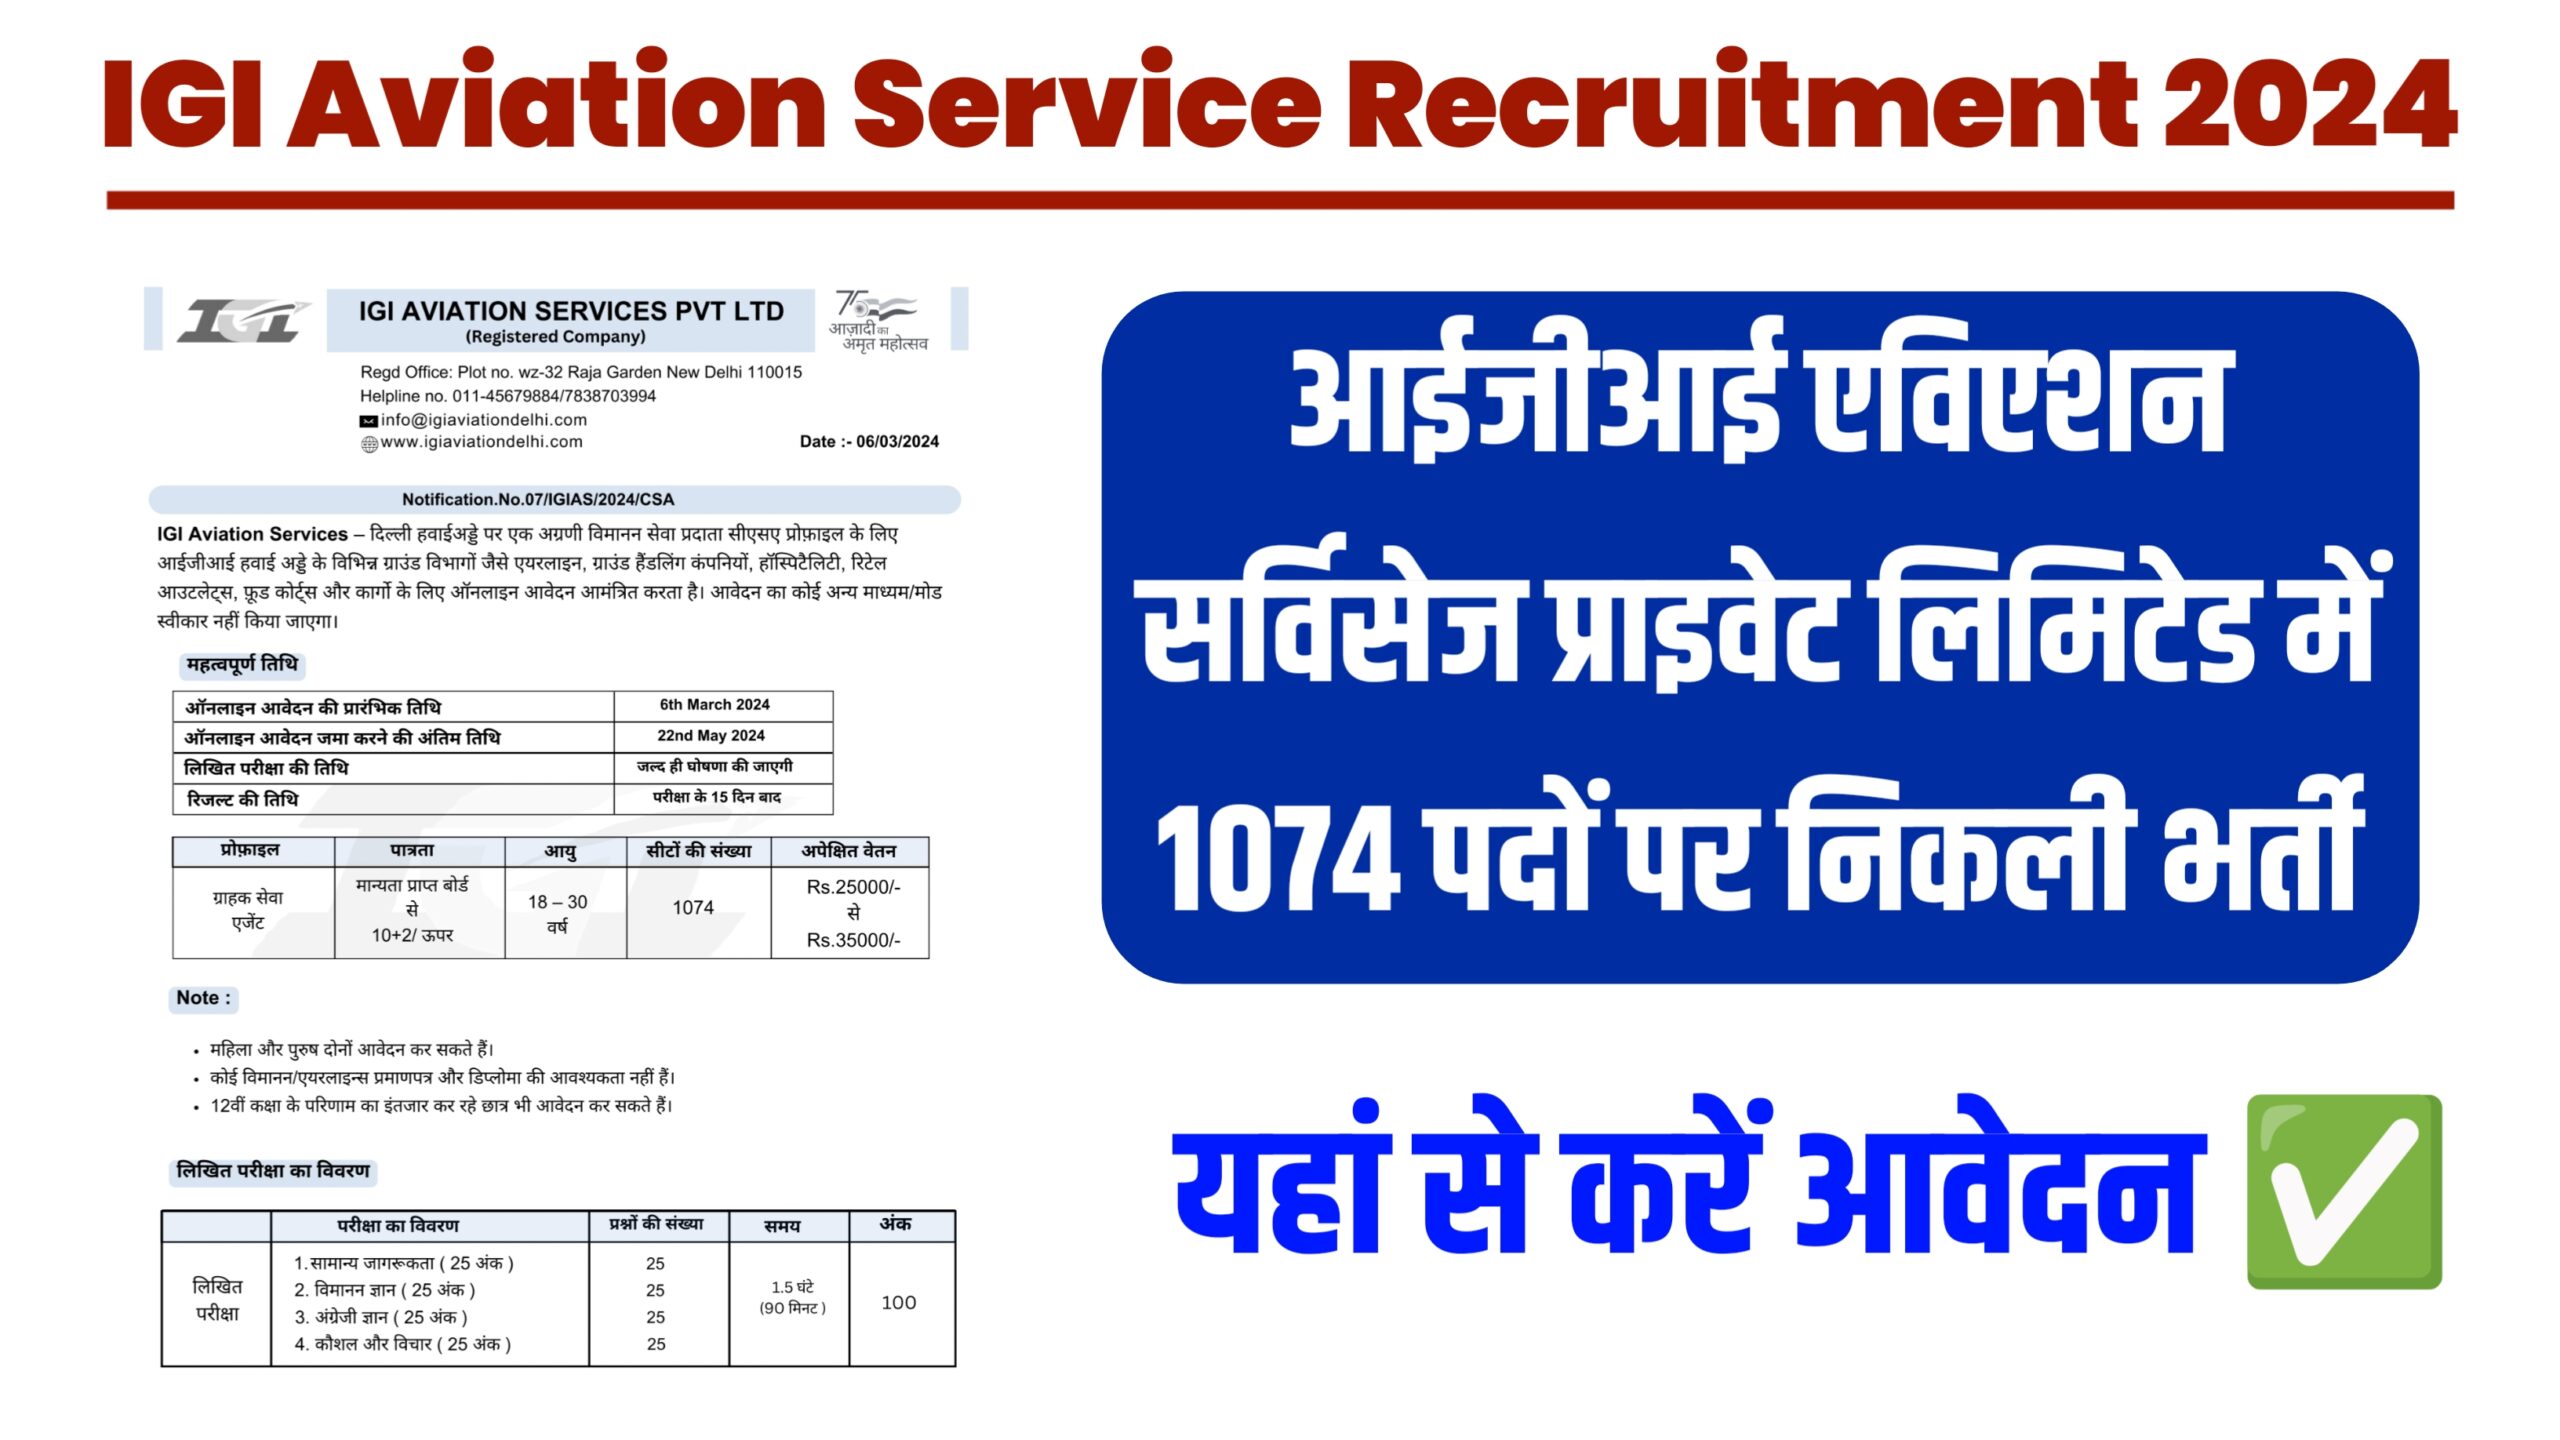 IGI Aviation Service Recruitment 2024